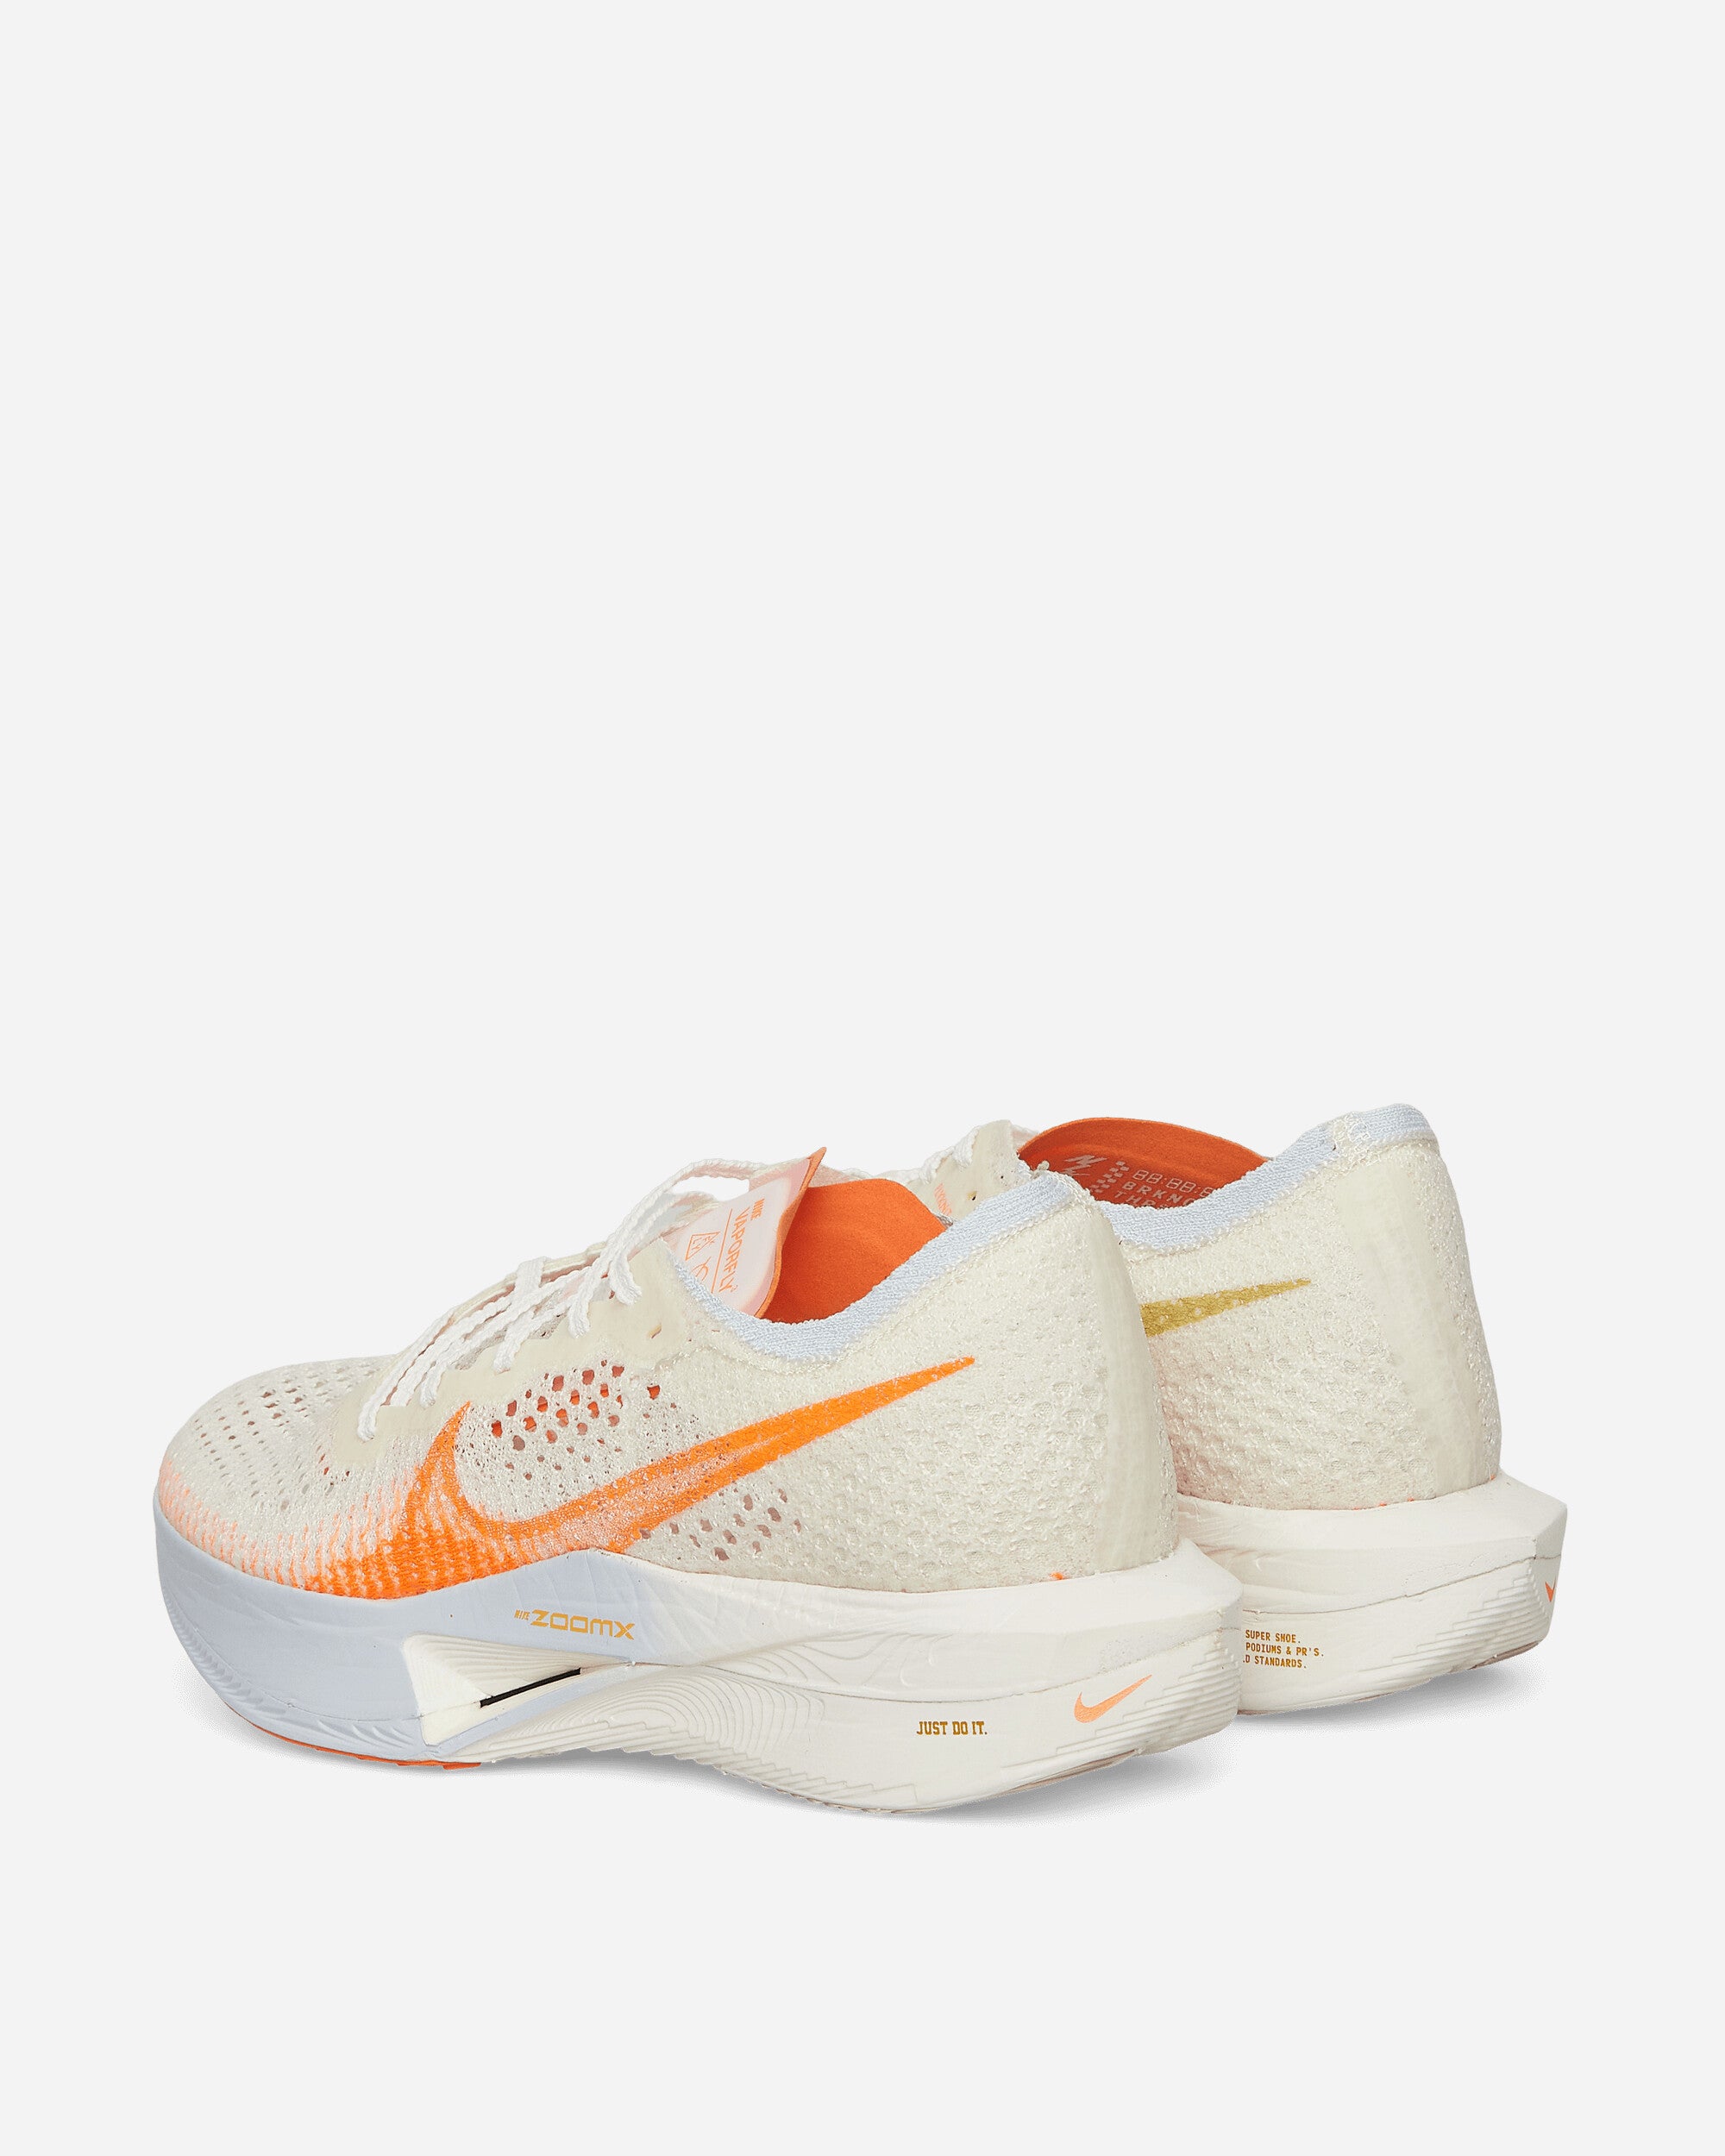 Nike Wmns Nike Zoomx Vaporfly Next% 3 Coconut Milk/Bright Mandarin Sneakers Low FV3634-181